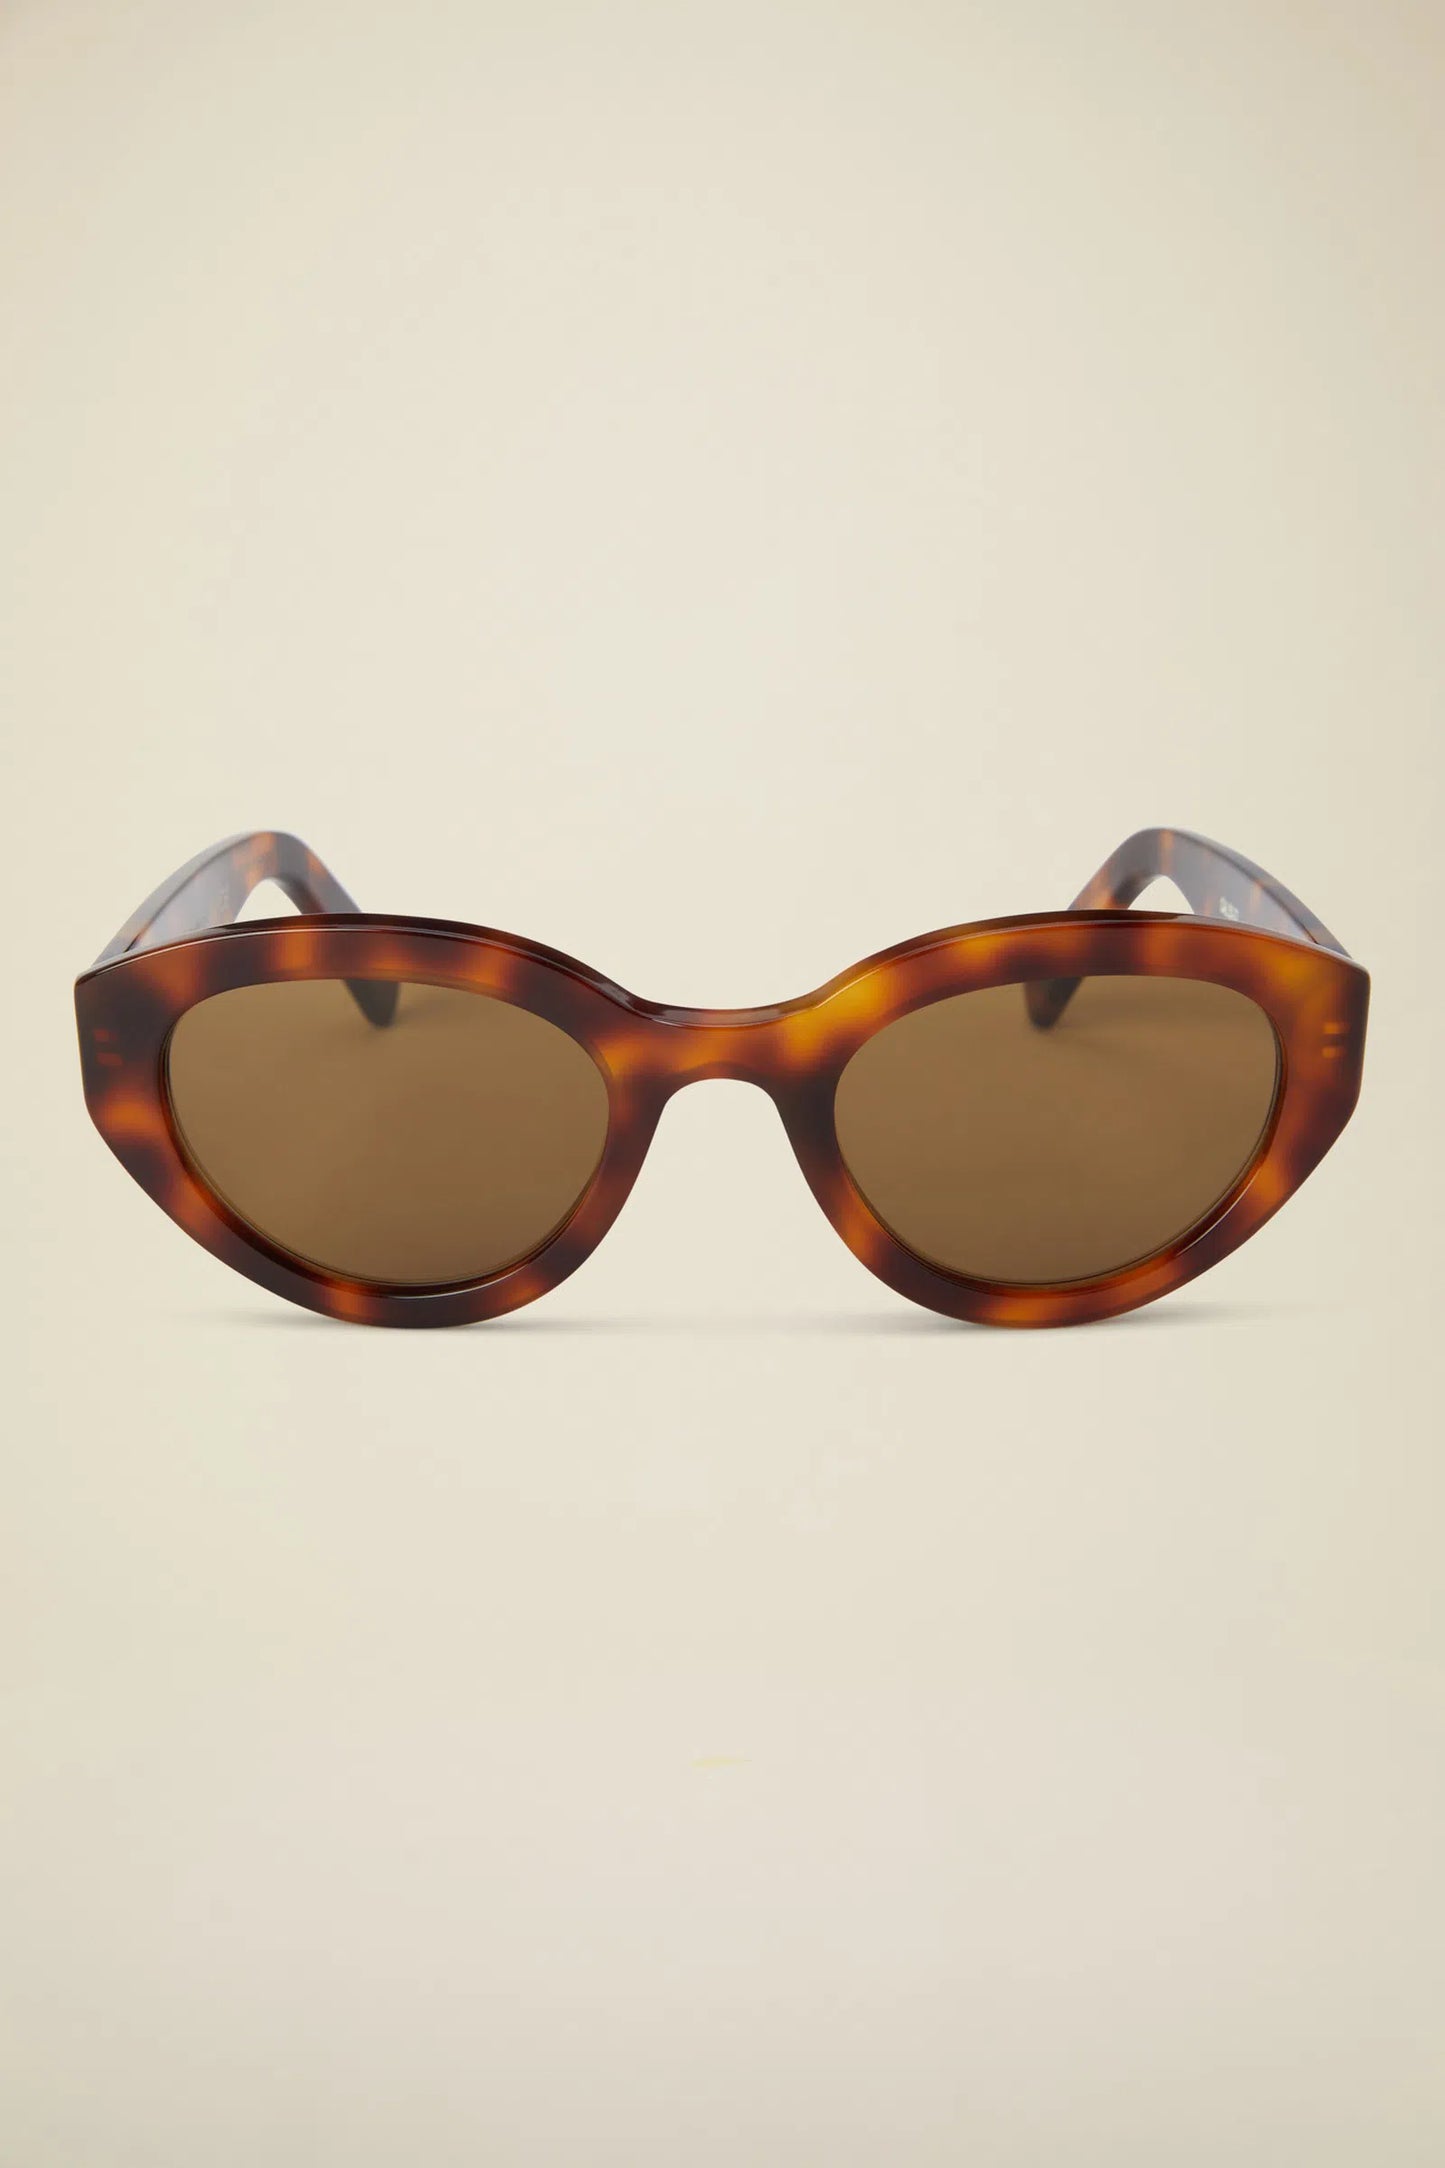 "Honey" sunglasses